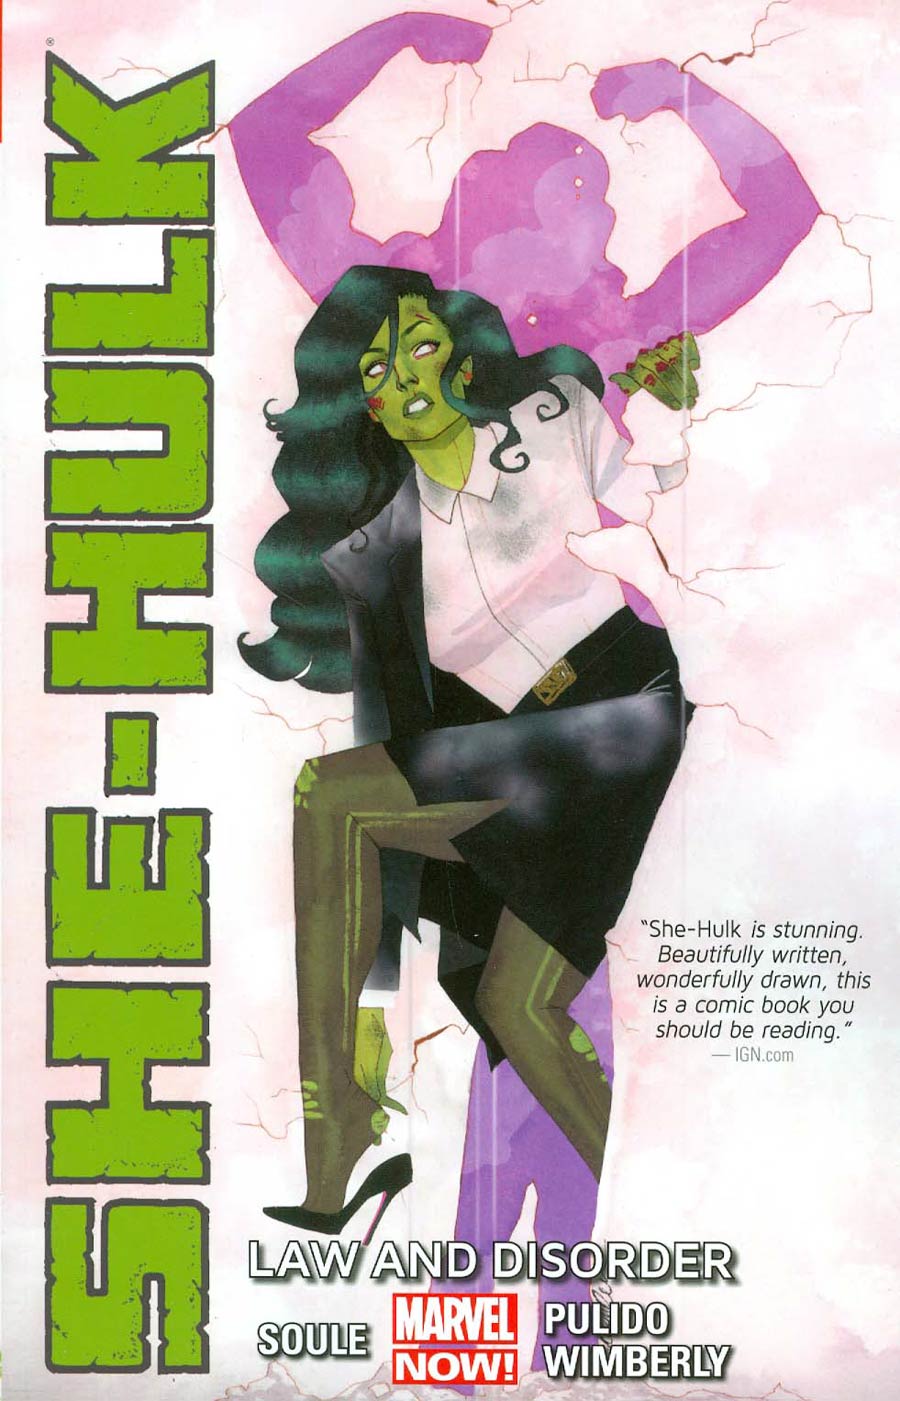 She-Hulk (2014) Vol 1 Law And Disorder TP